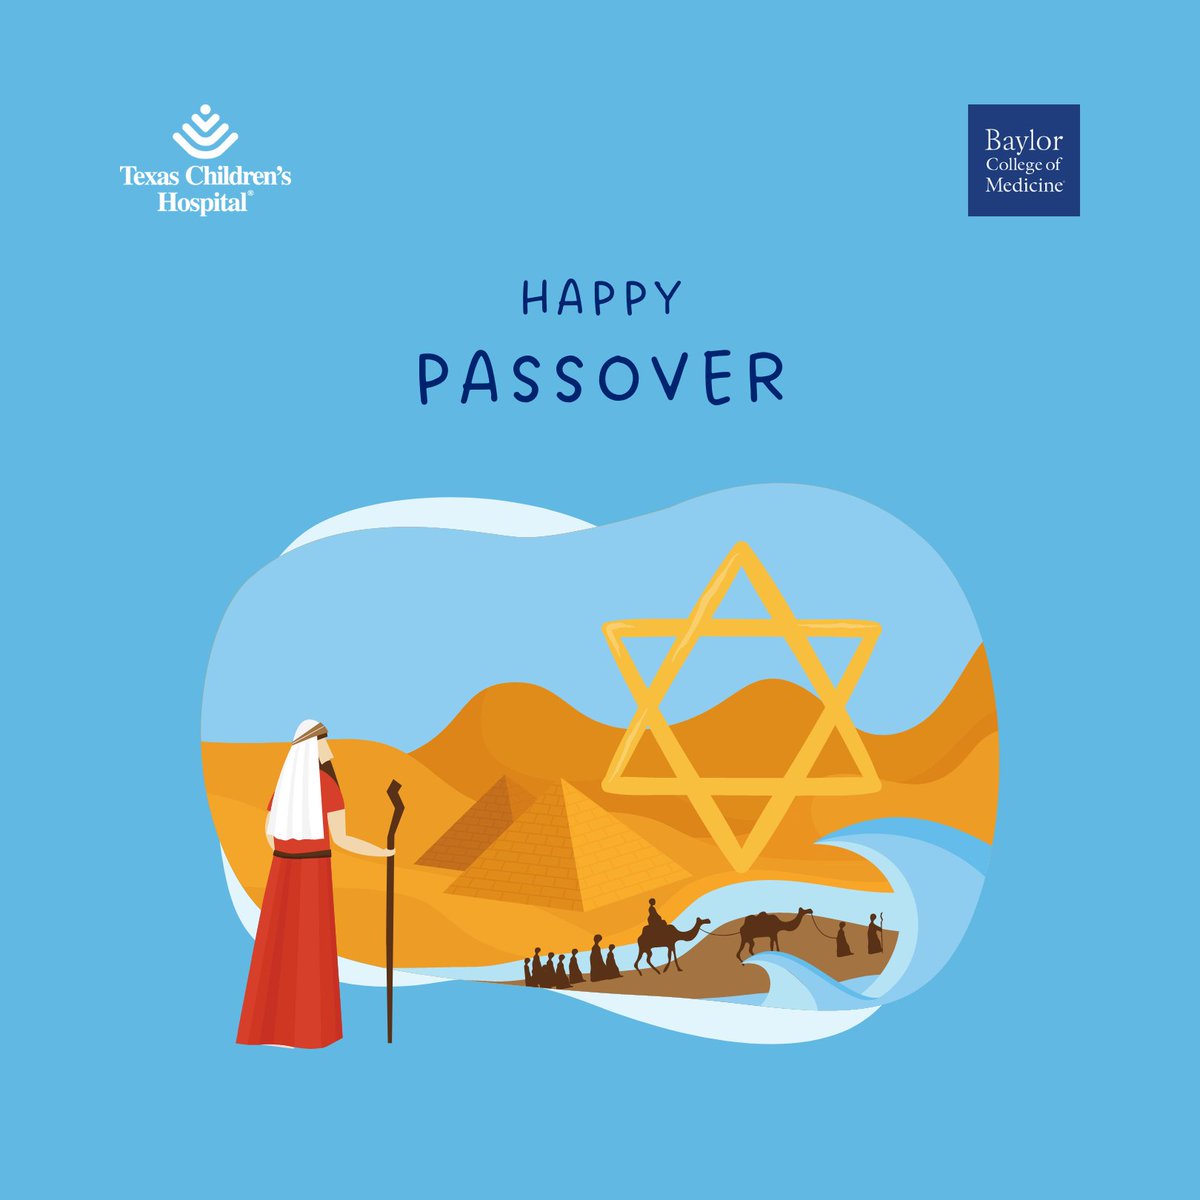 Happy Passover or “Chag Pesach sameach!” #TexasChildrensGlobal